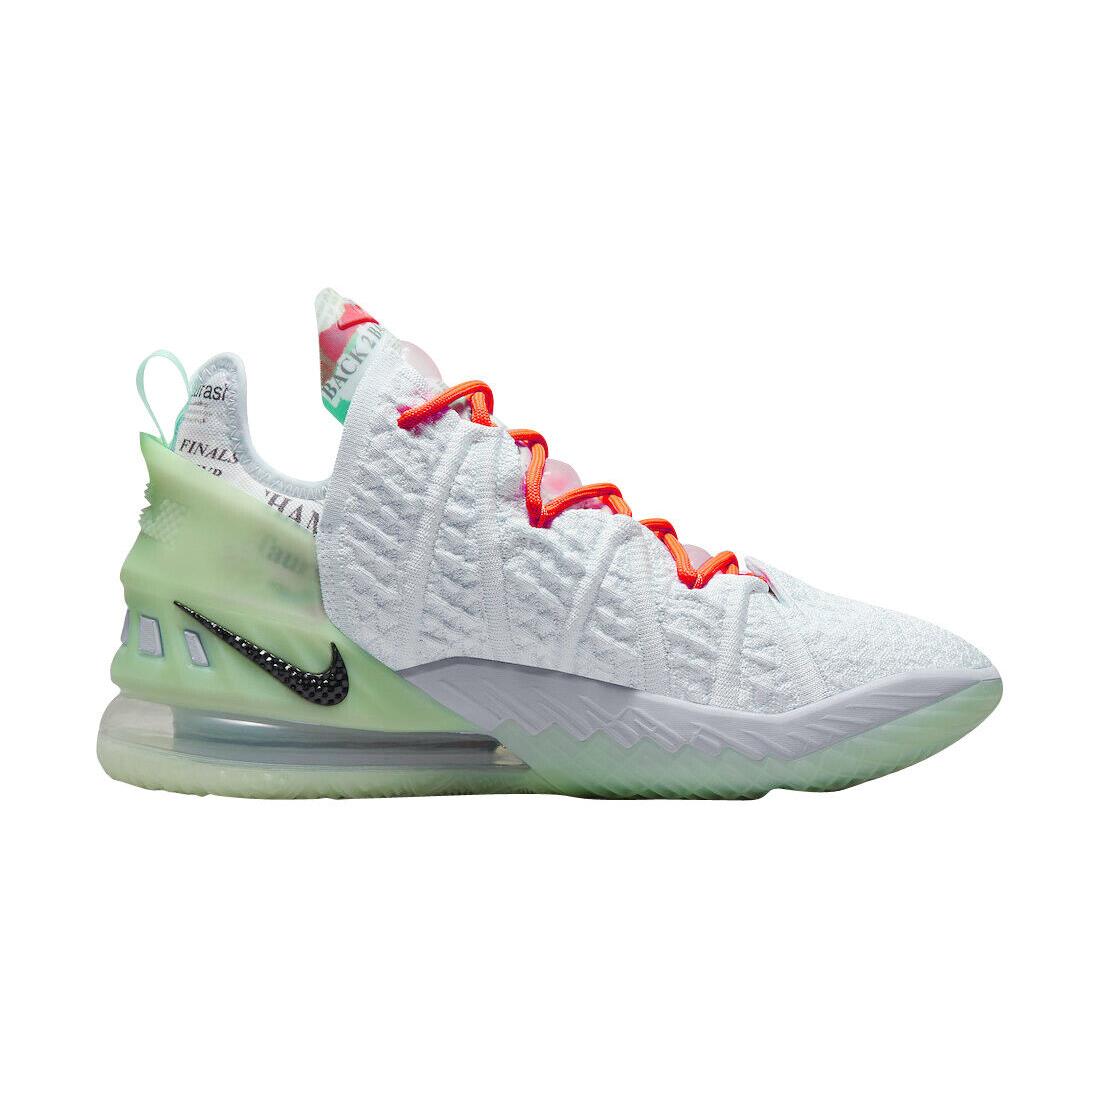 Nike Lebron Xviii Blue Tint Dynamic Turq Basketball Shoes Sneakers M 11 / W 12.5